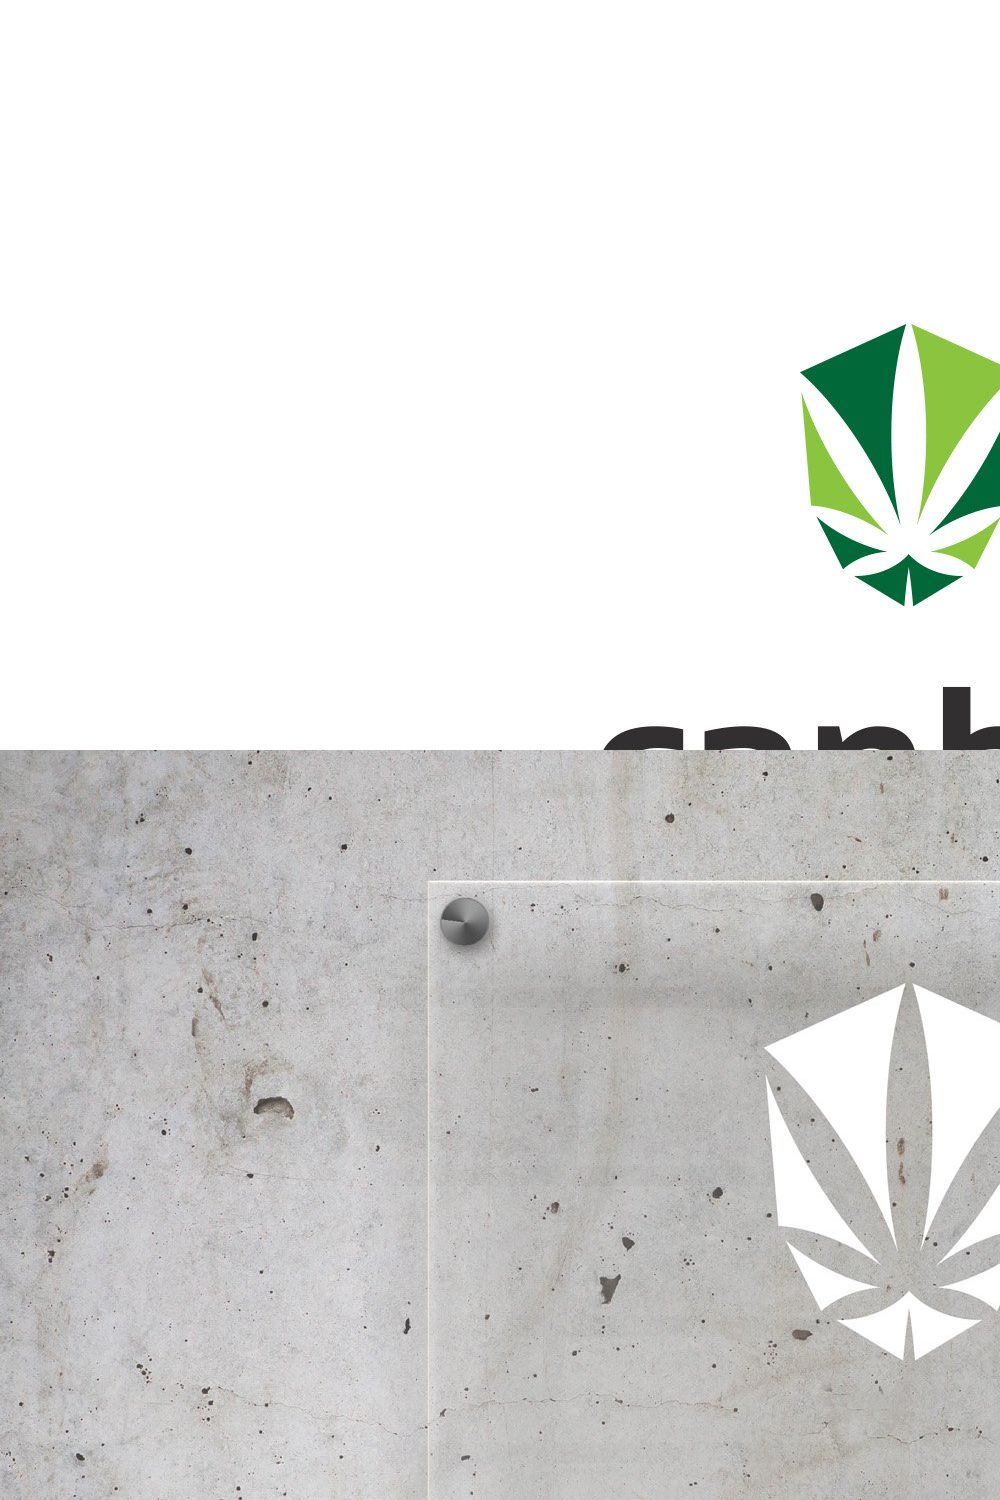 Cannabis Sativa Hemp Shield Logo pinterest preview image.